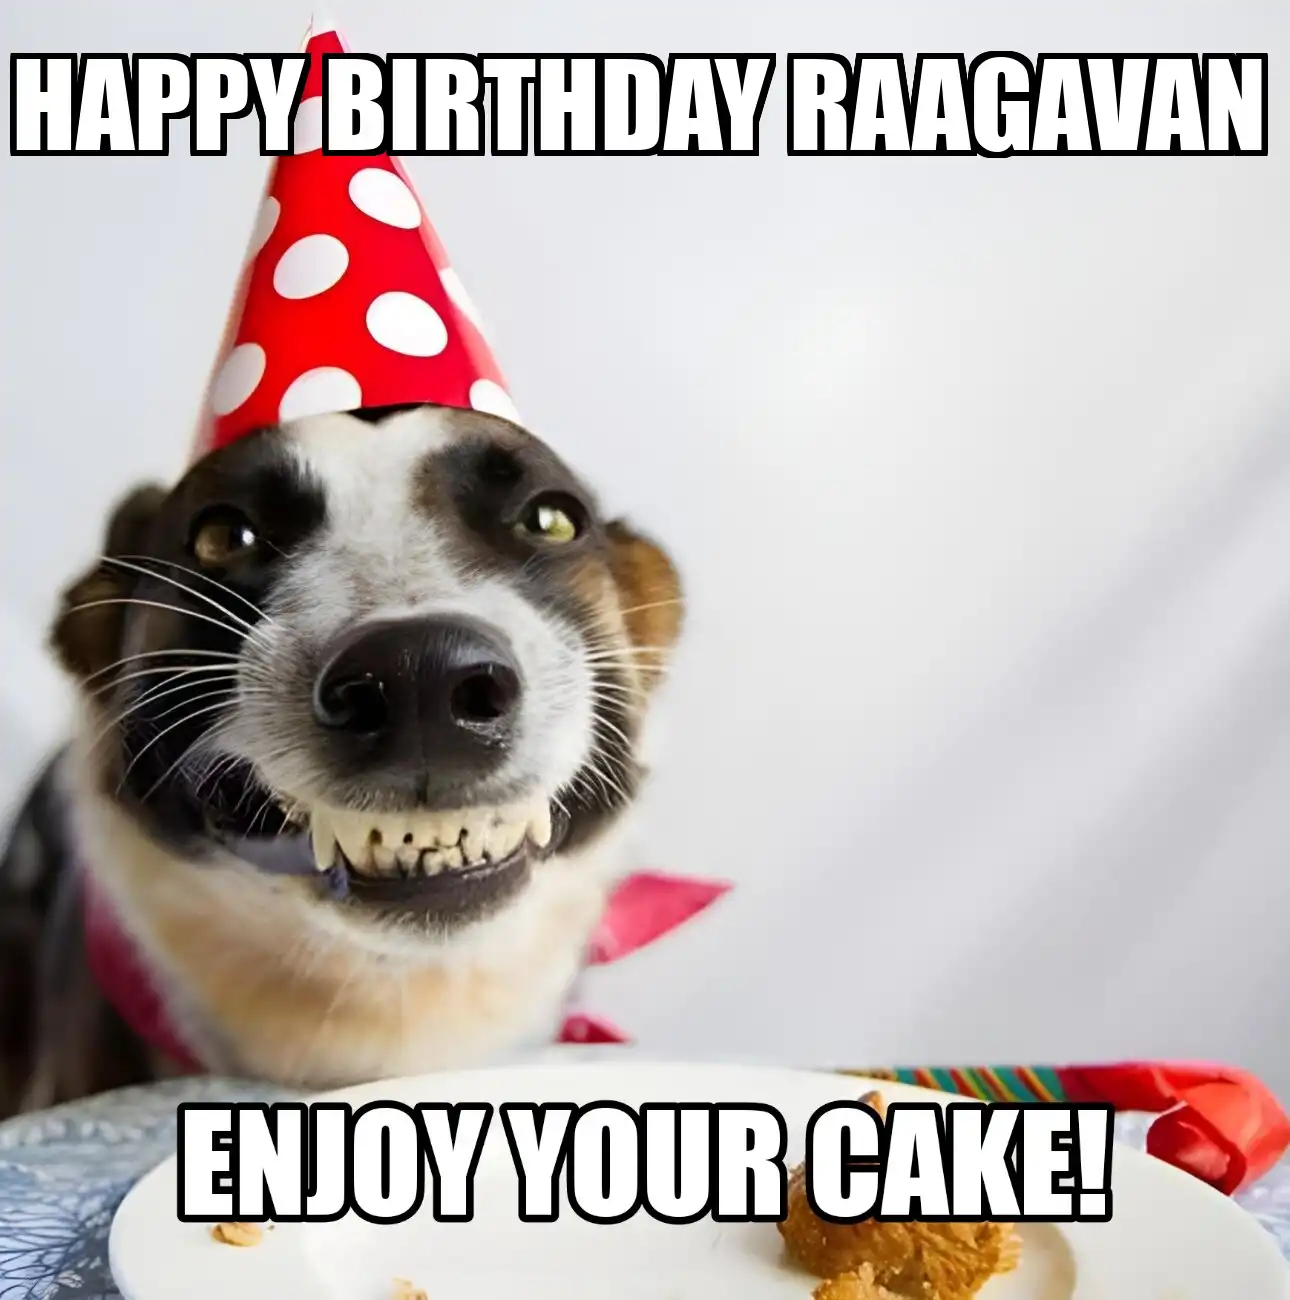 Happy Birthday Raagavan Enjoy Your Cake Dog Meme